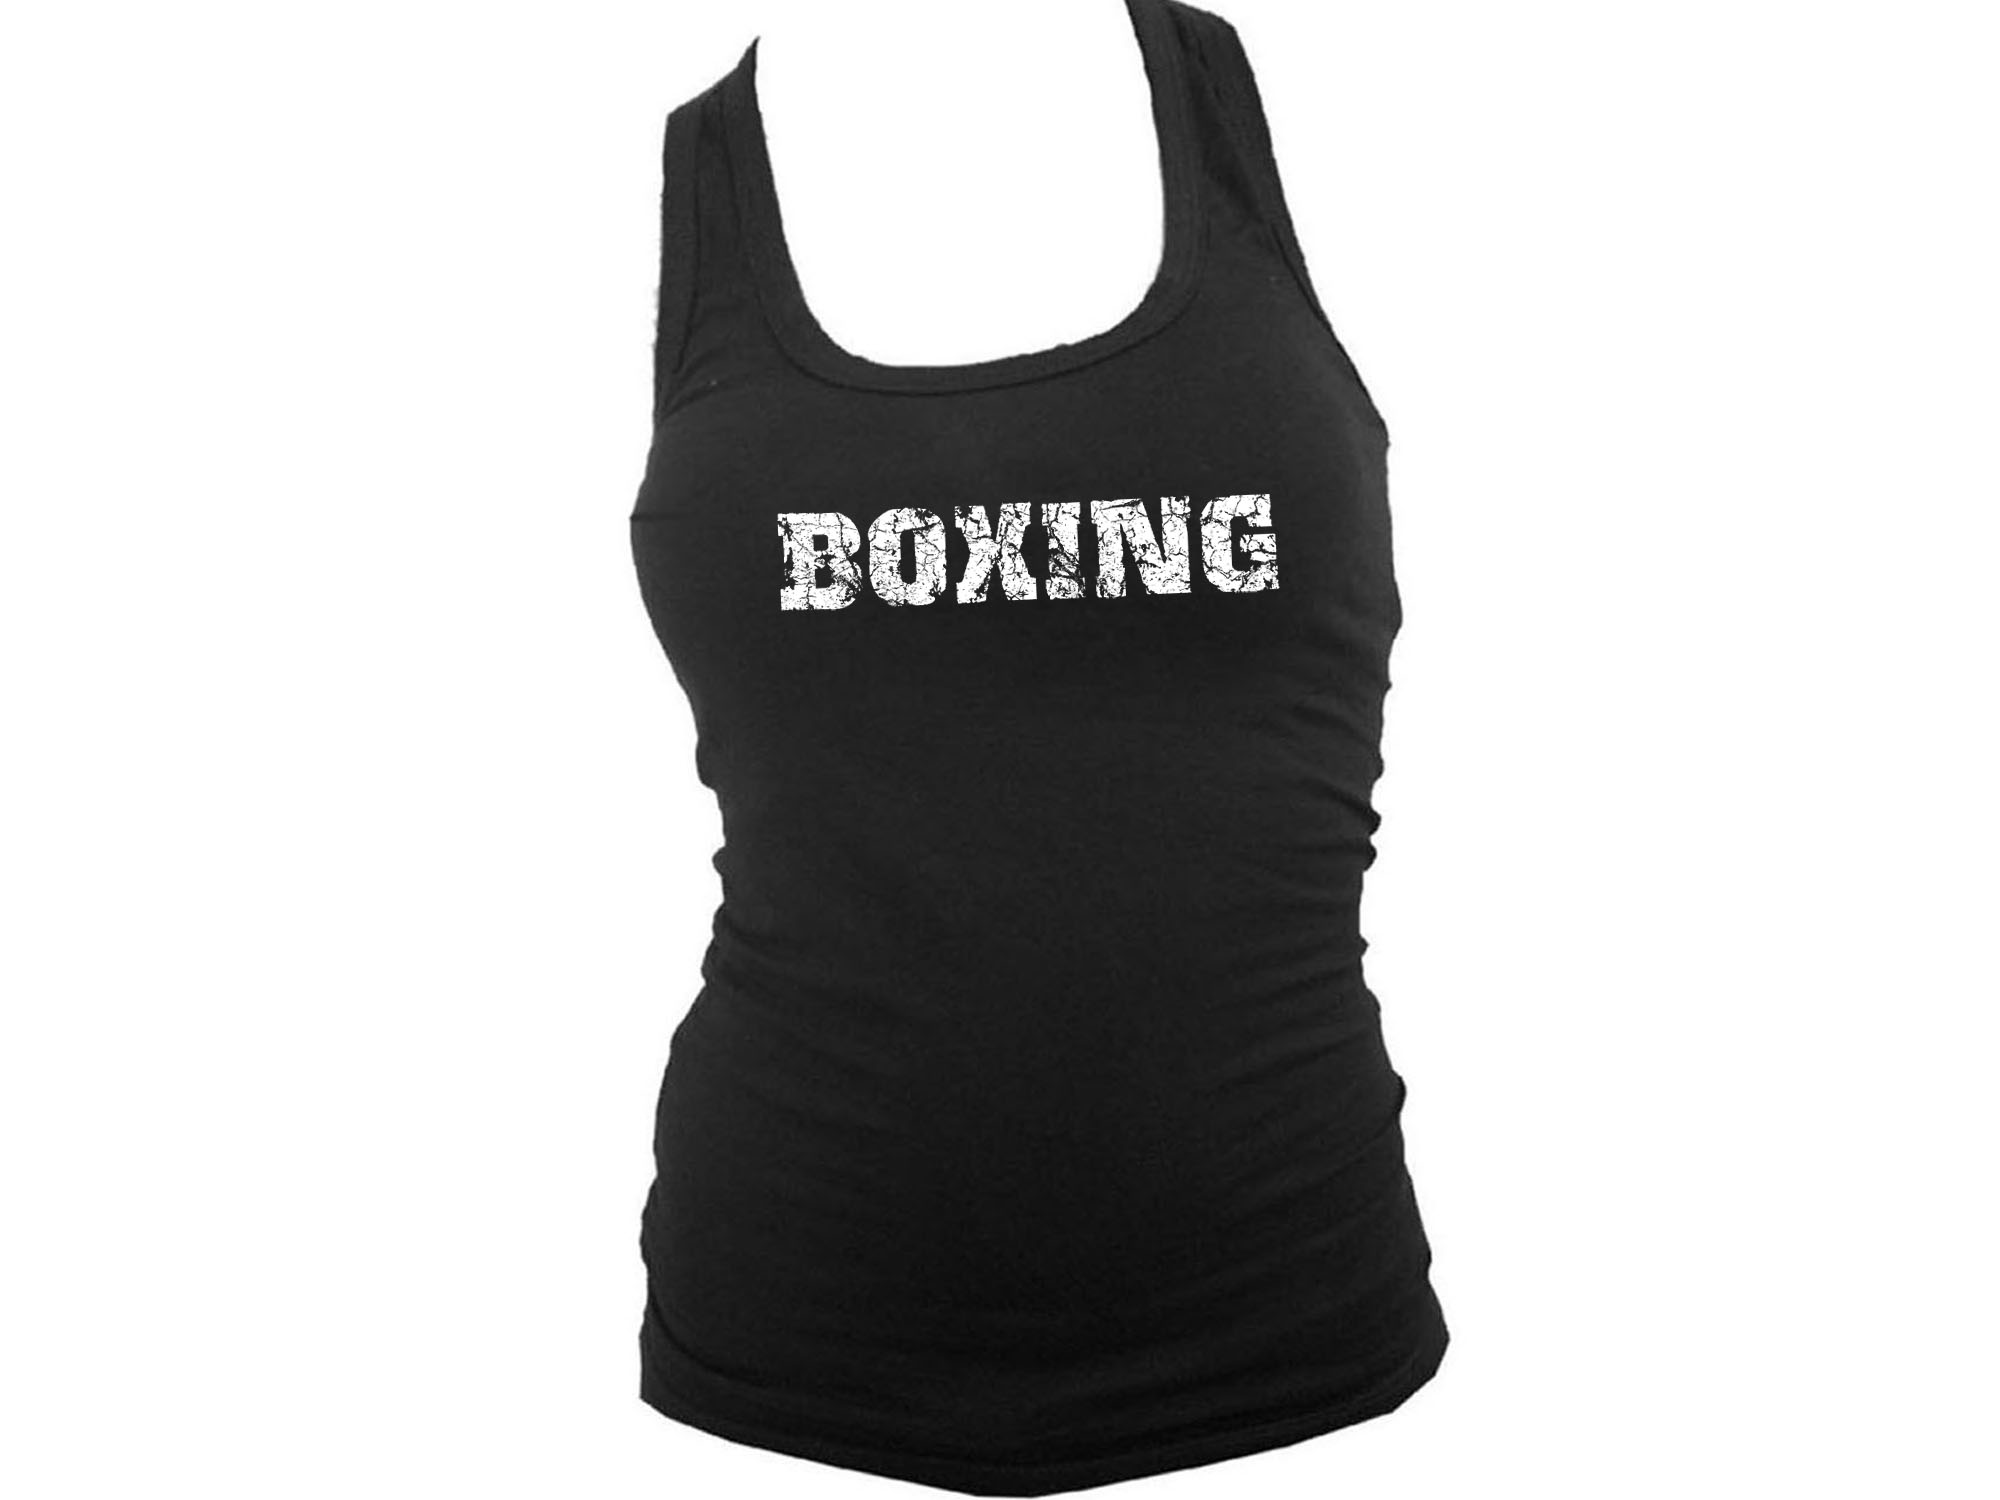 Boxing distressed print women tank top S/M